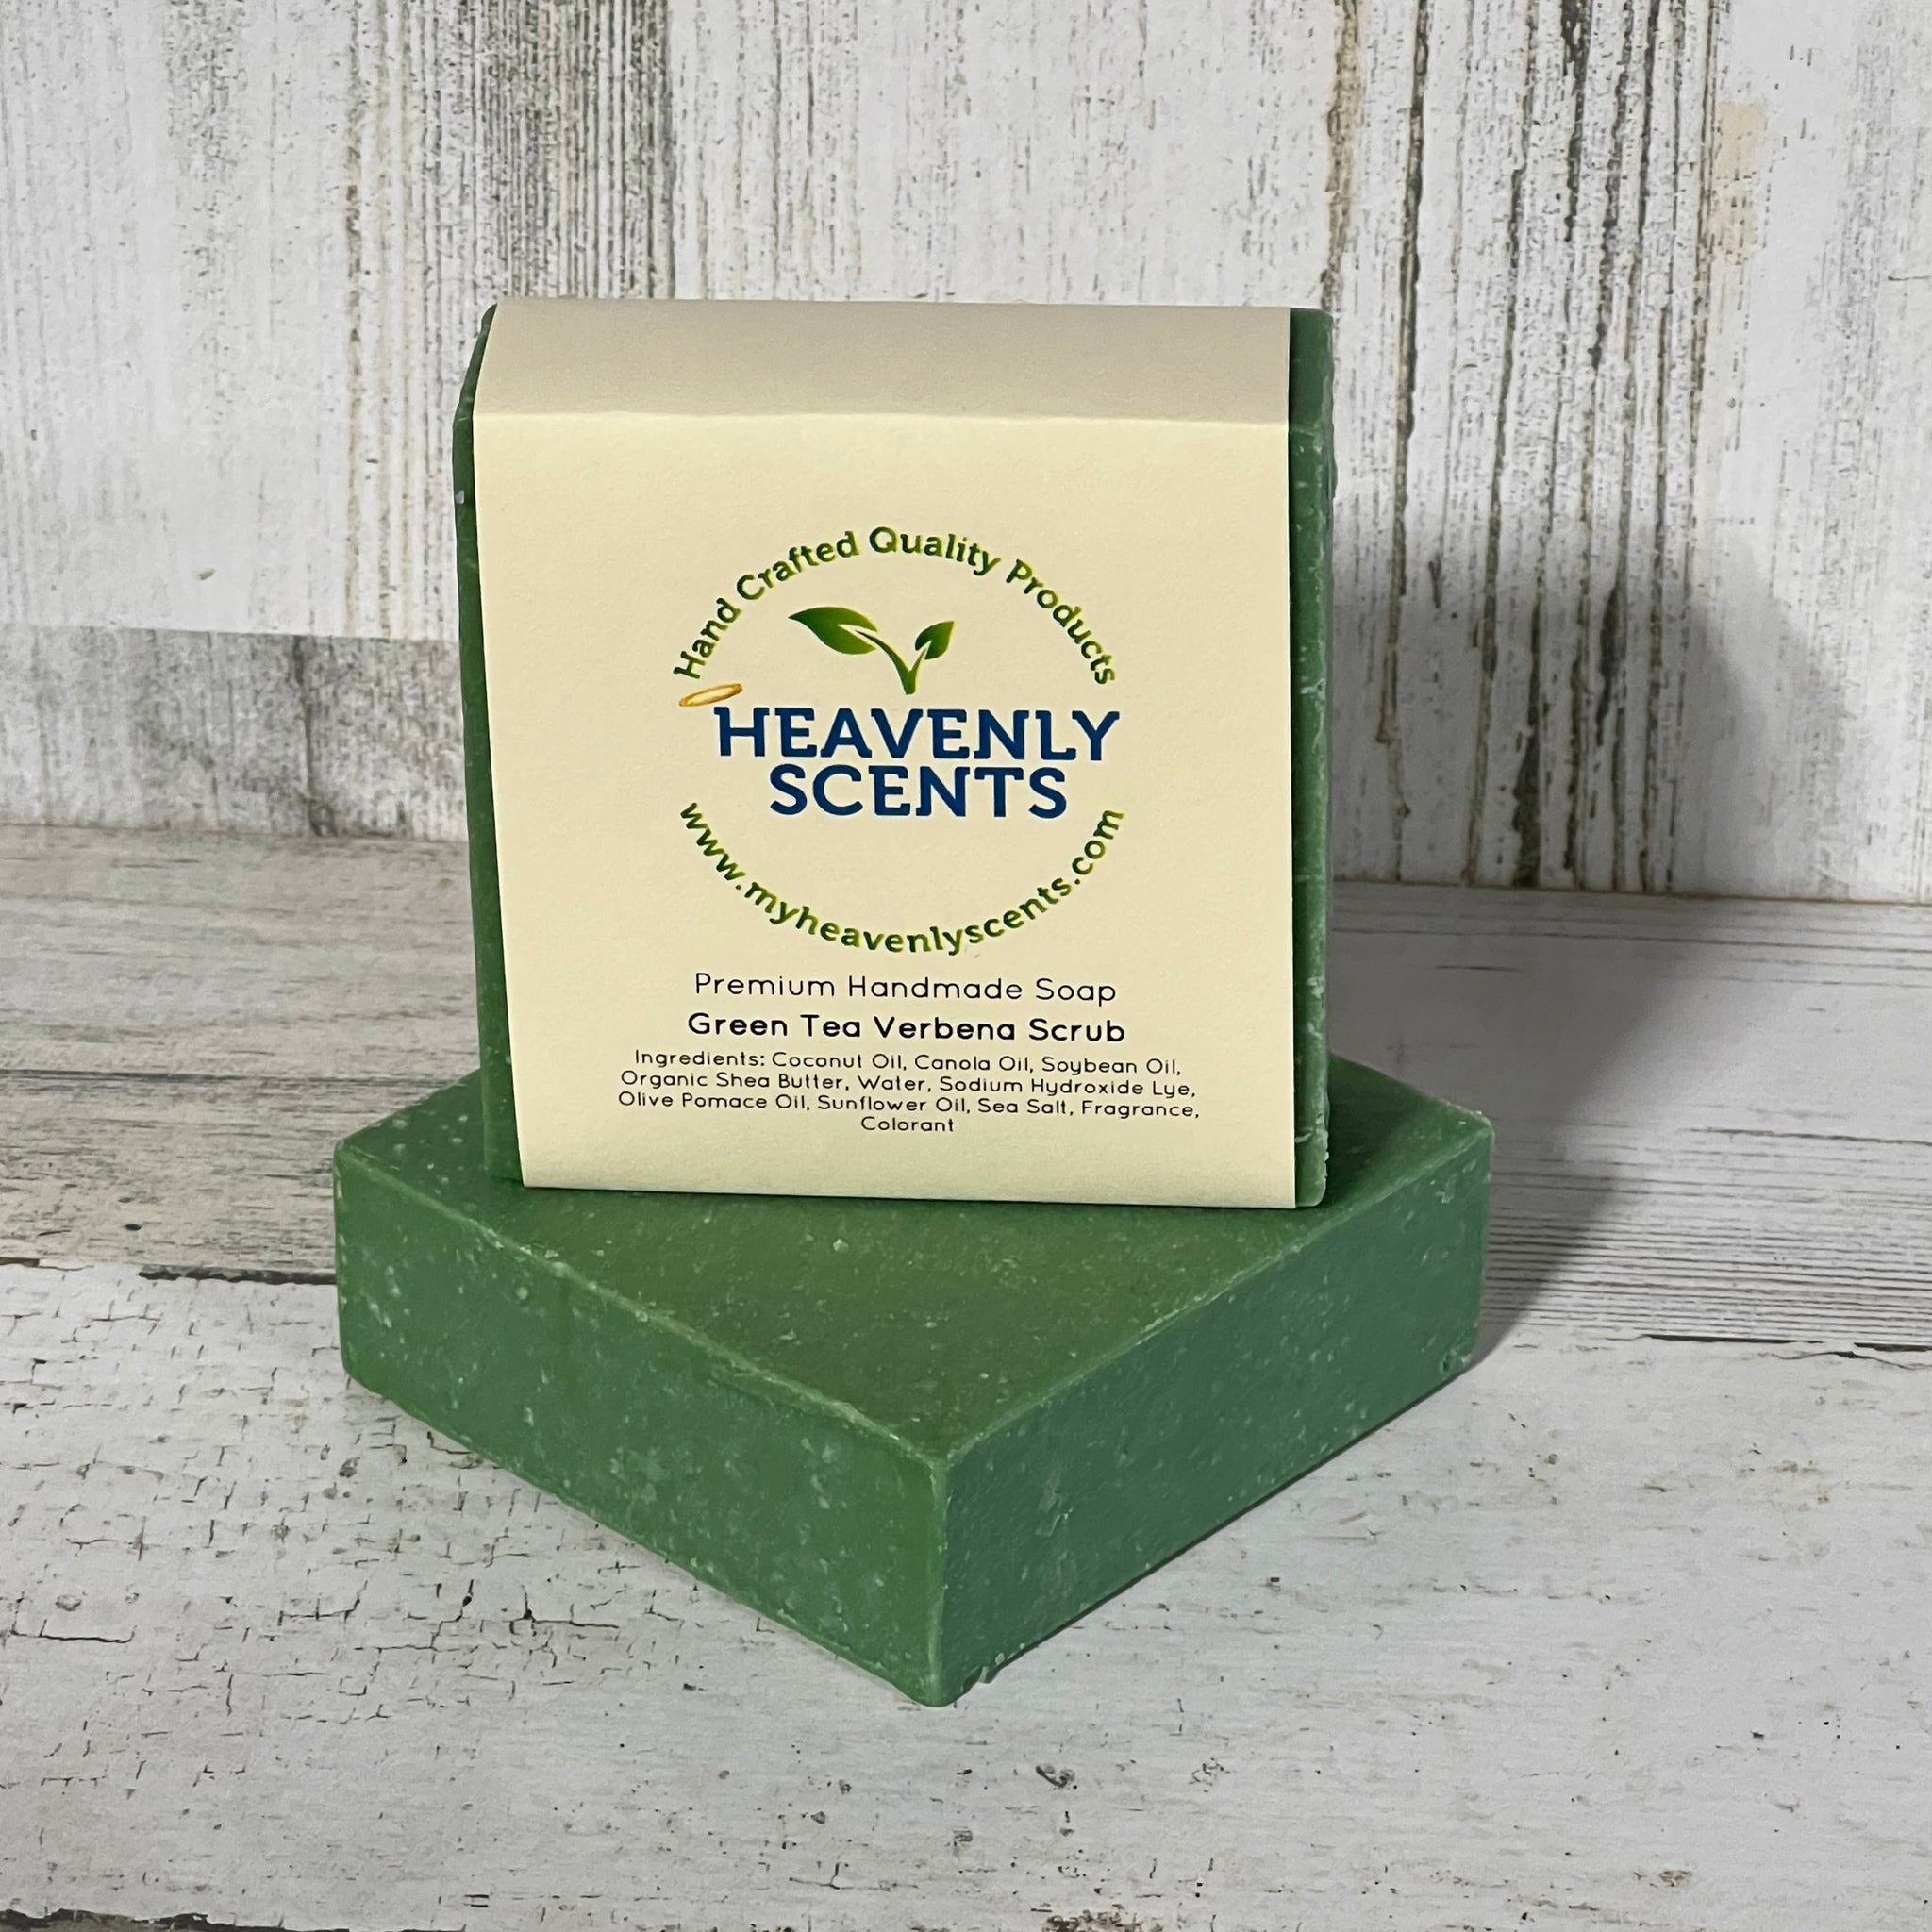 Green Tea Verbena Scrub Cold Processed Soap Myheavenlyscents